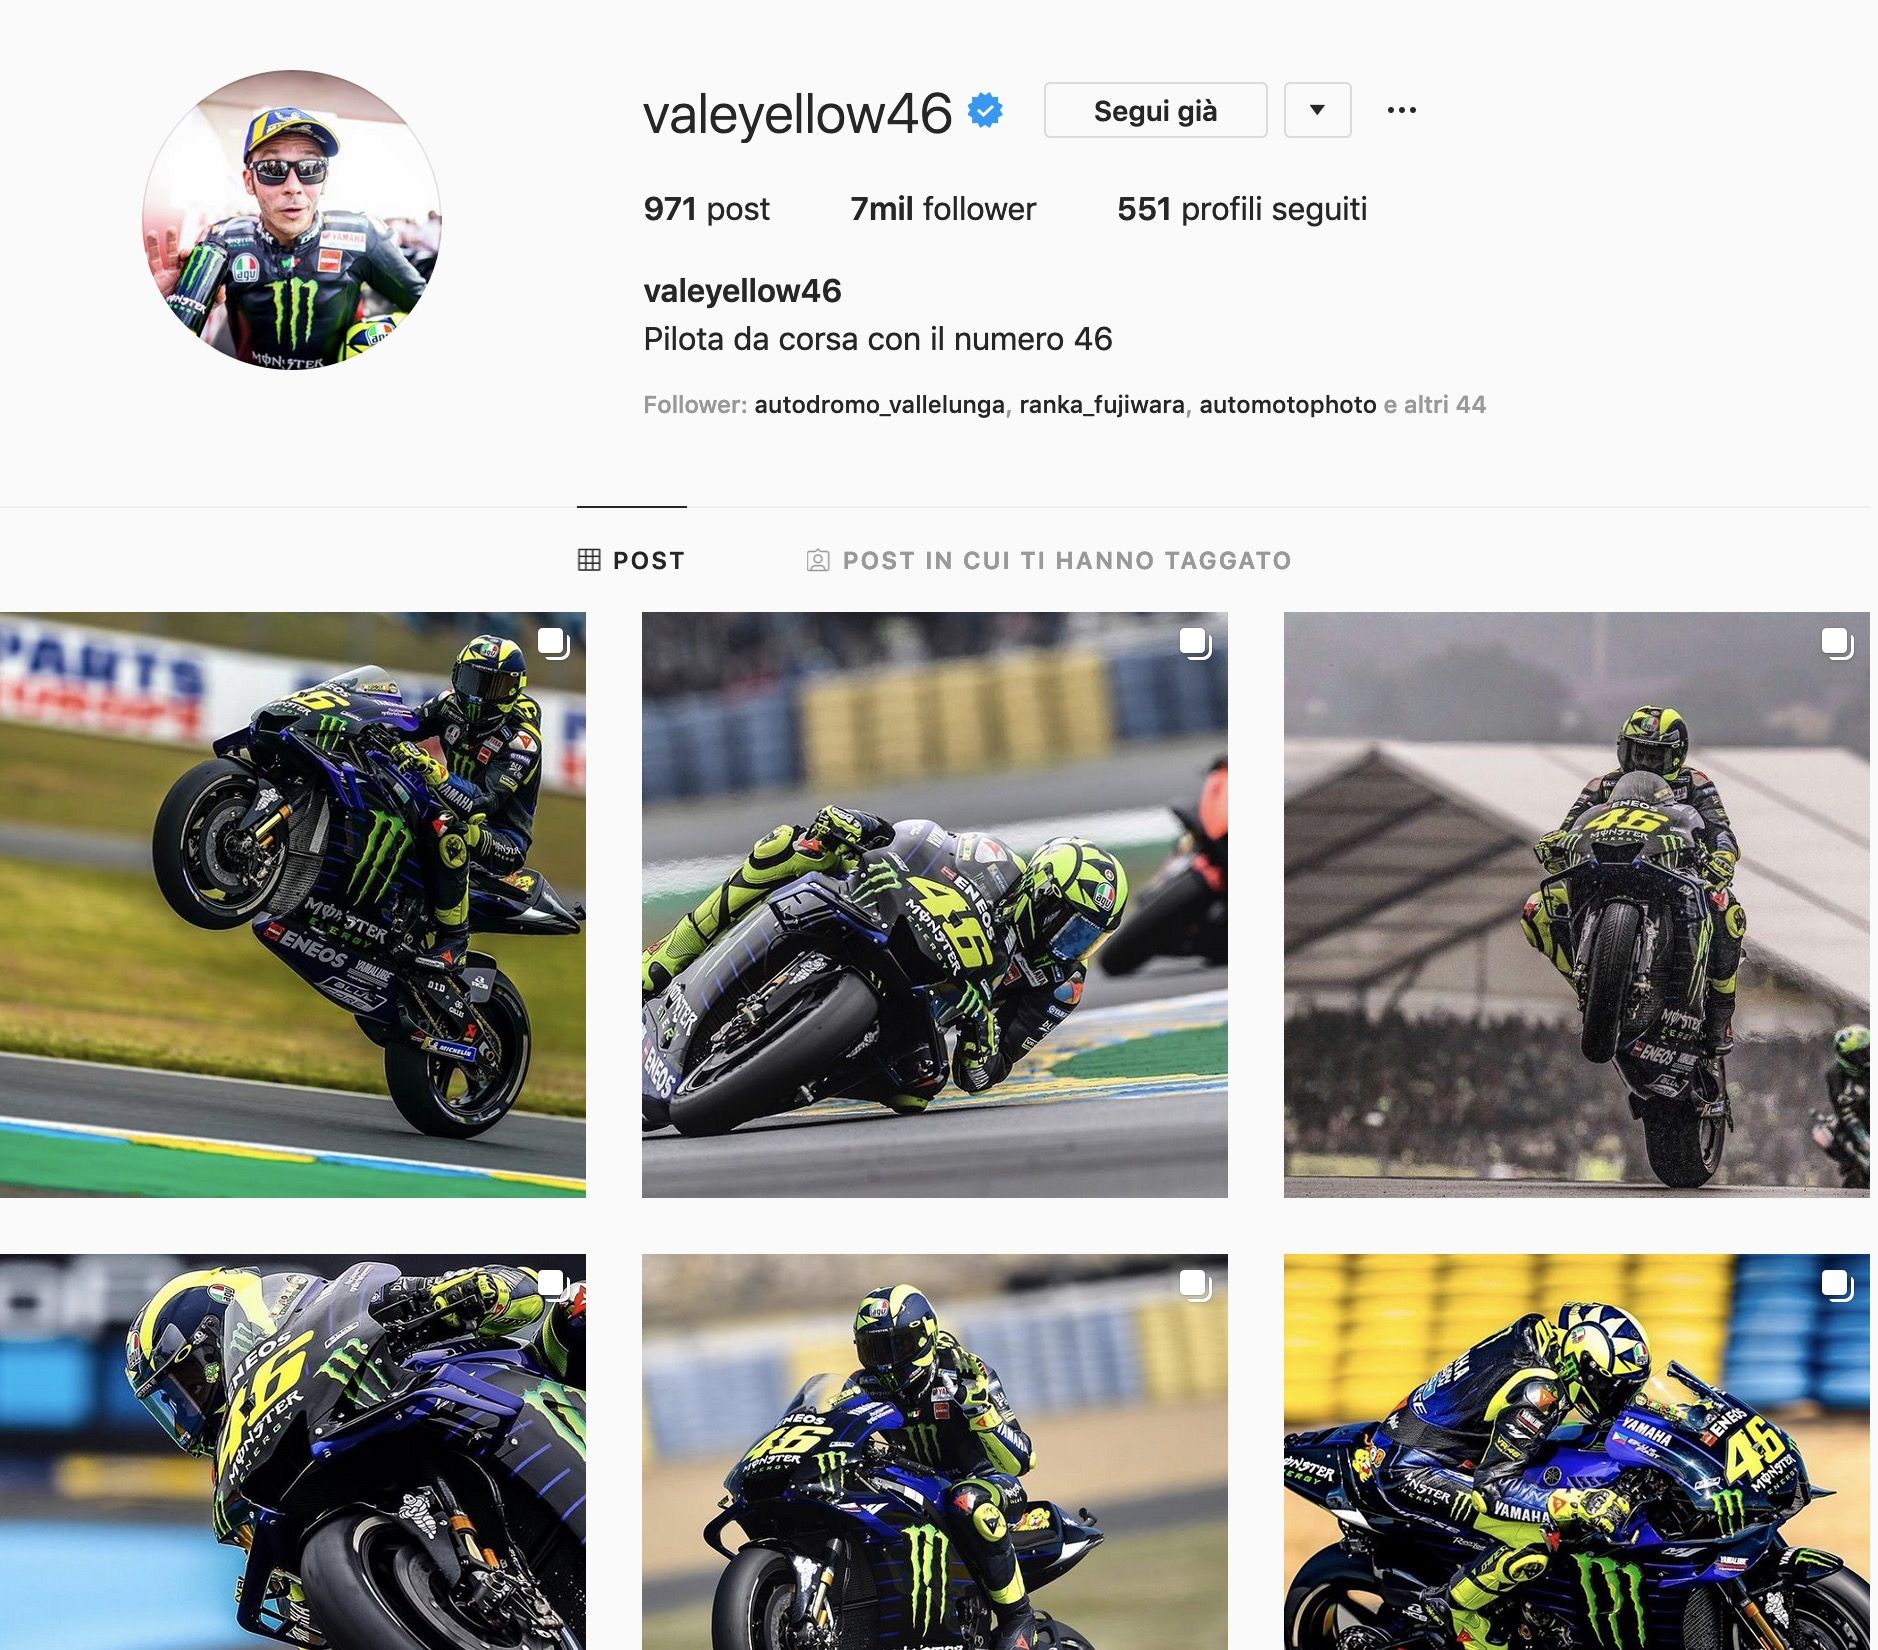 MotoGP, Rossi in the of Fedez on Instagram, Chiara still far ahead | GPone.com